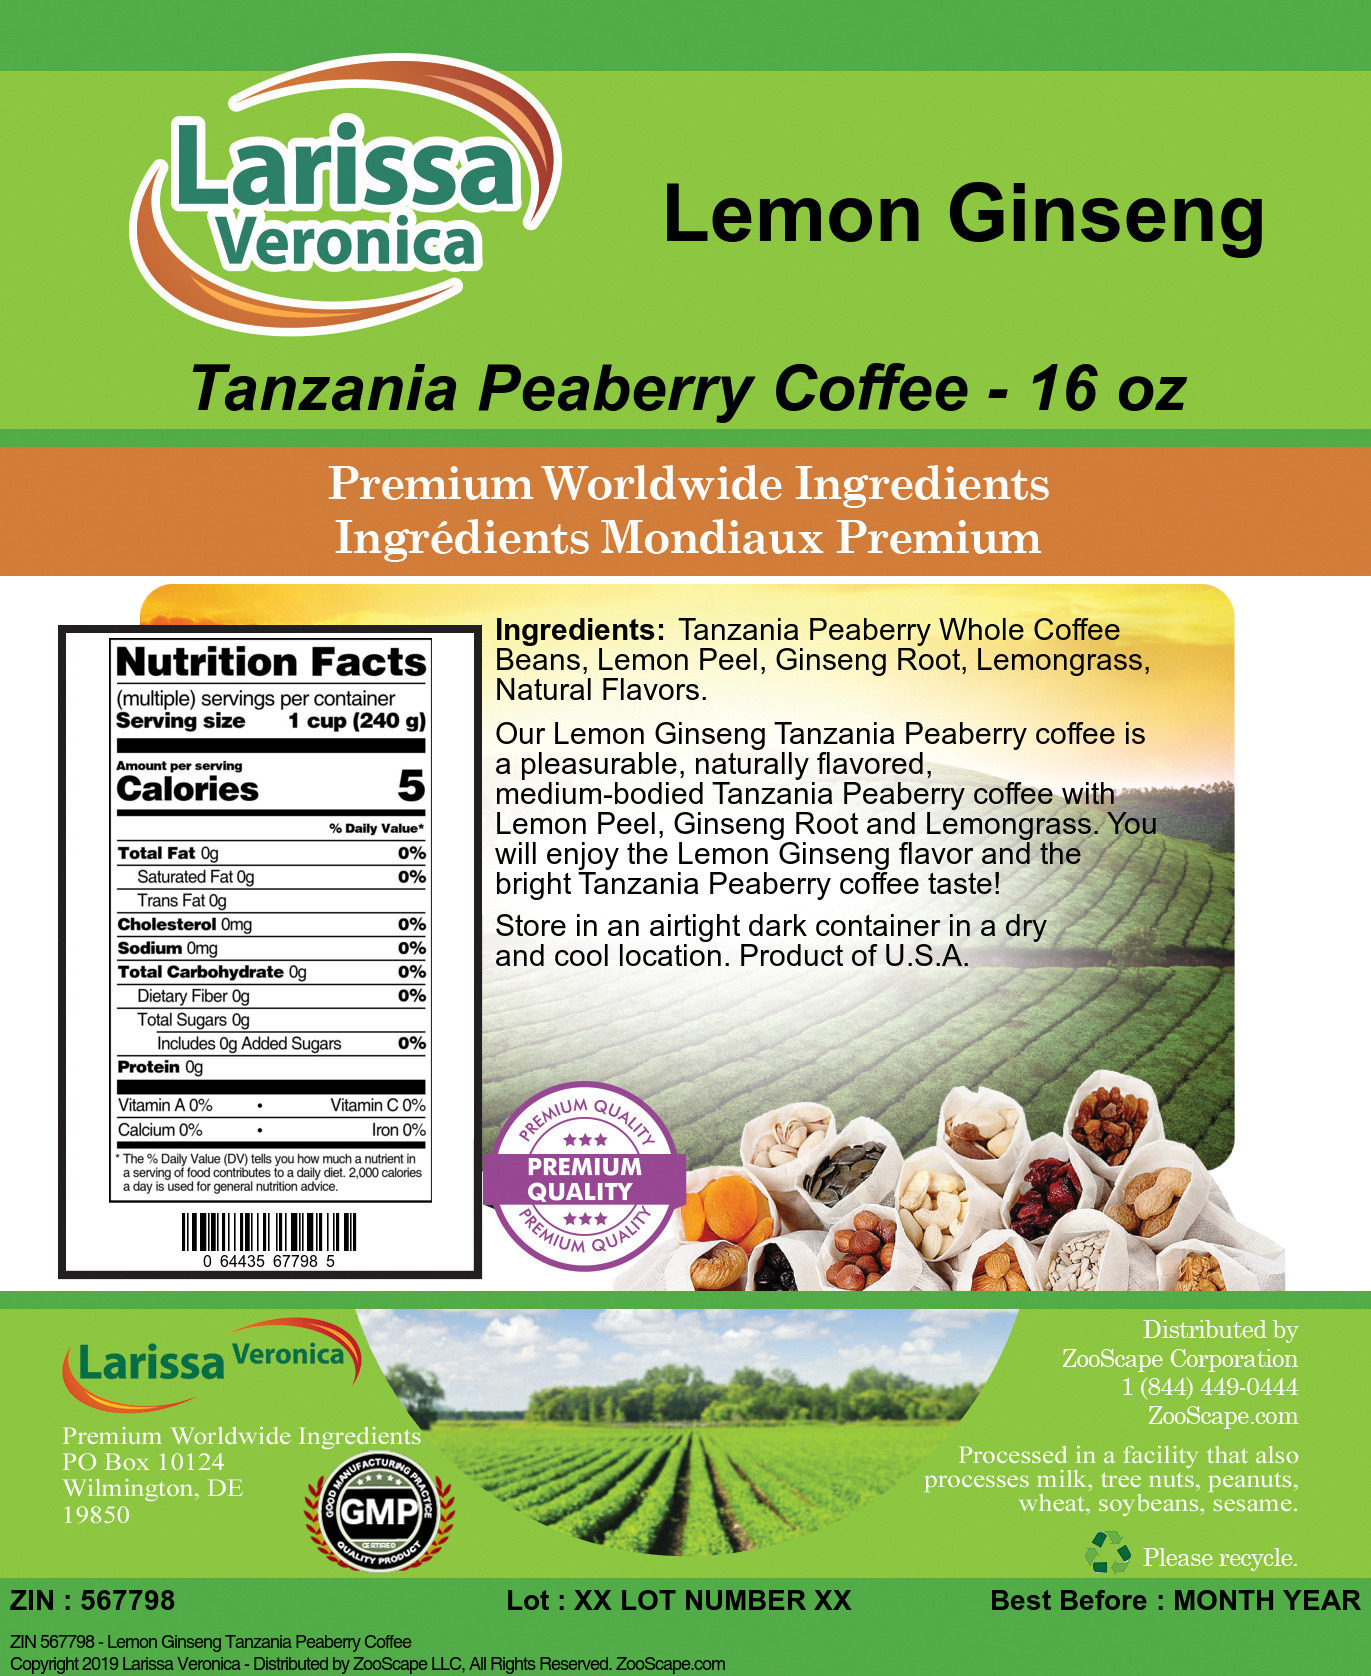 Lemon Ginseng Tanzania Peaberry Coffee - Label